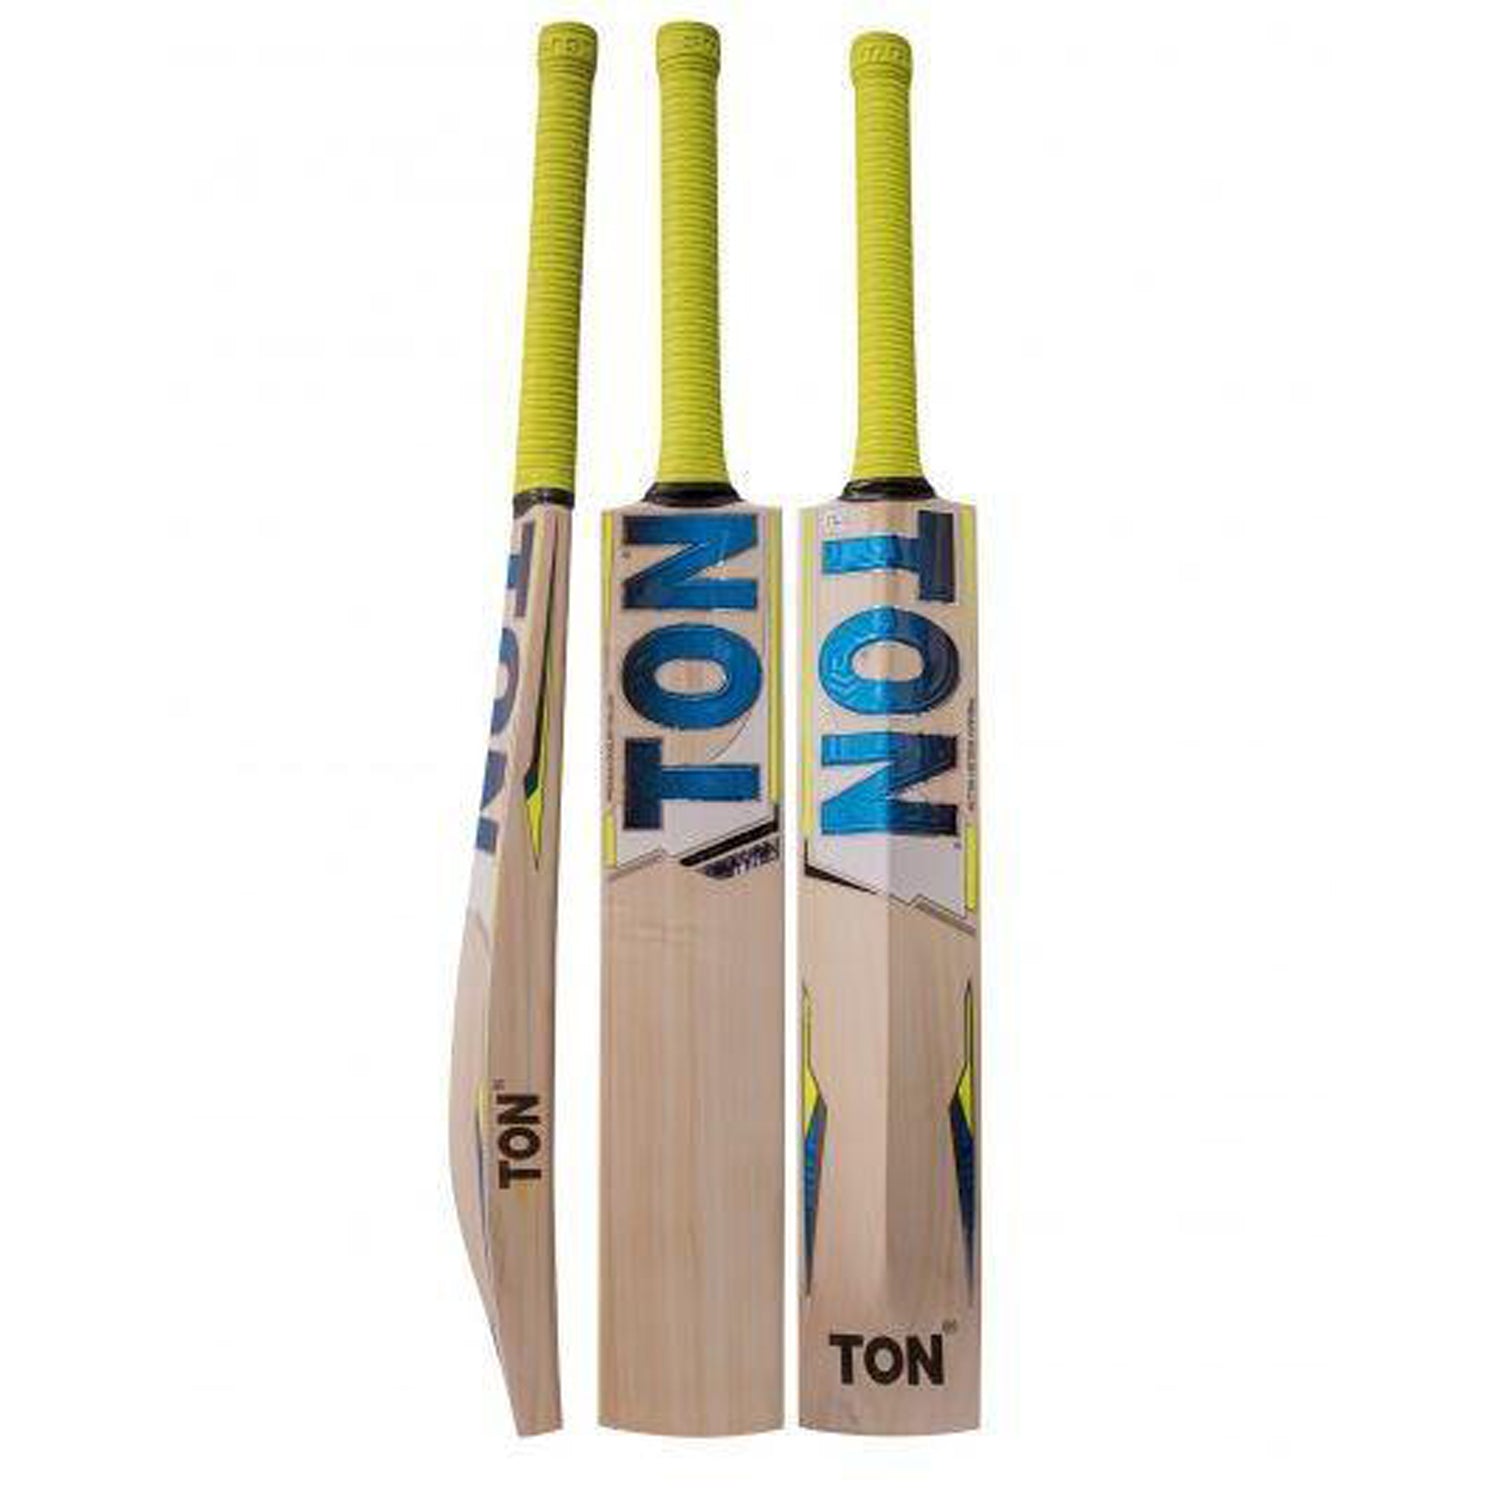 SS Ton Slasher English Willow Cricket Bat - Best Price online Prokicksports.com